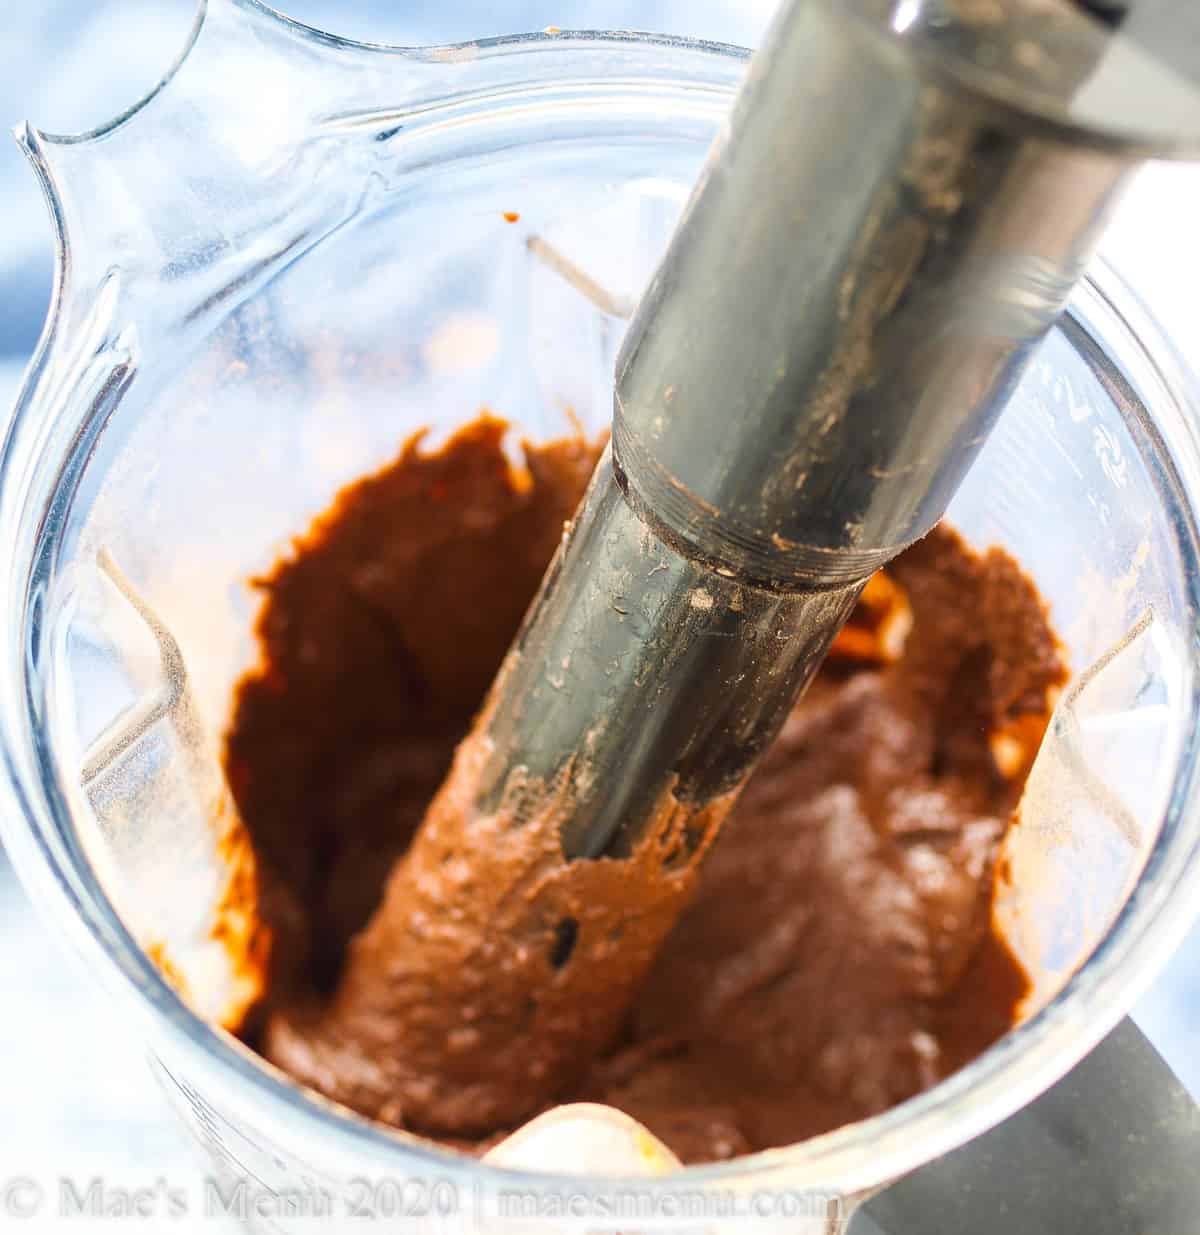 The vitamix blender of fudgy date brownie batter.